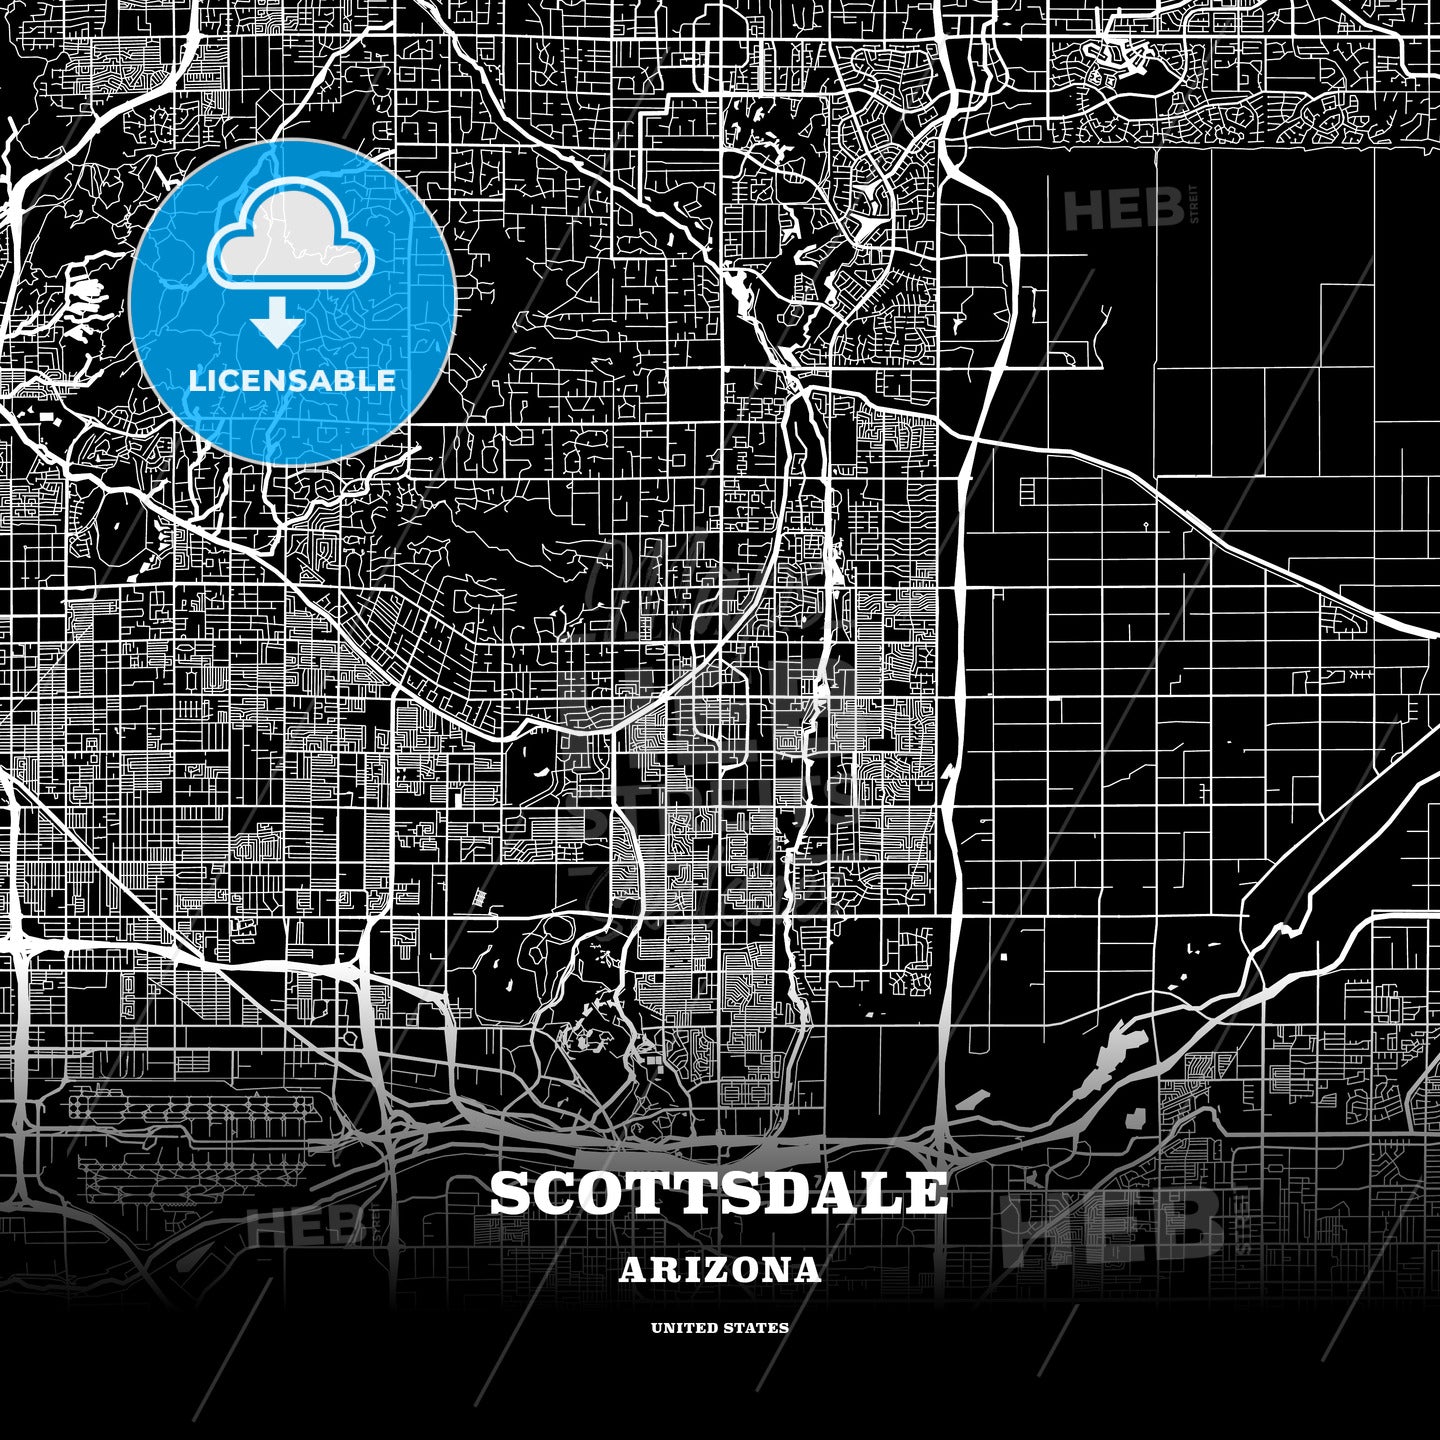 Scottsdale, Arizona, USA map